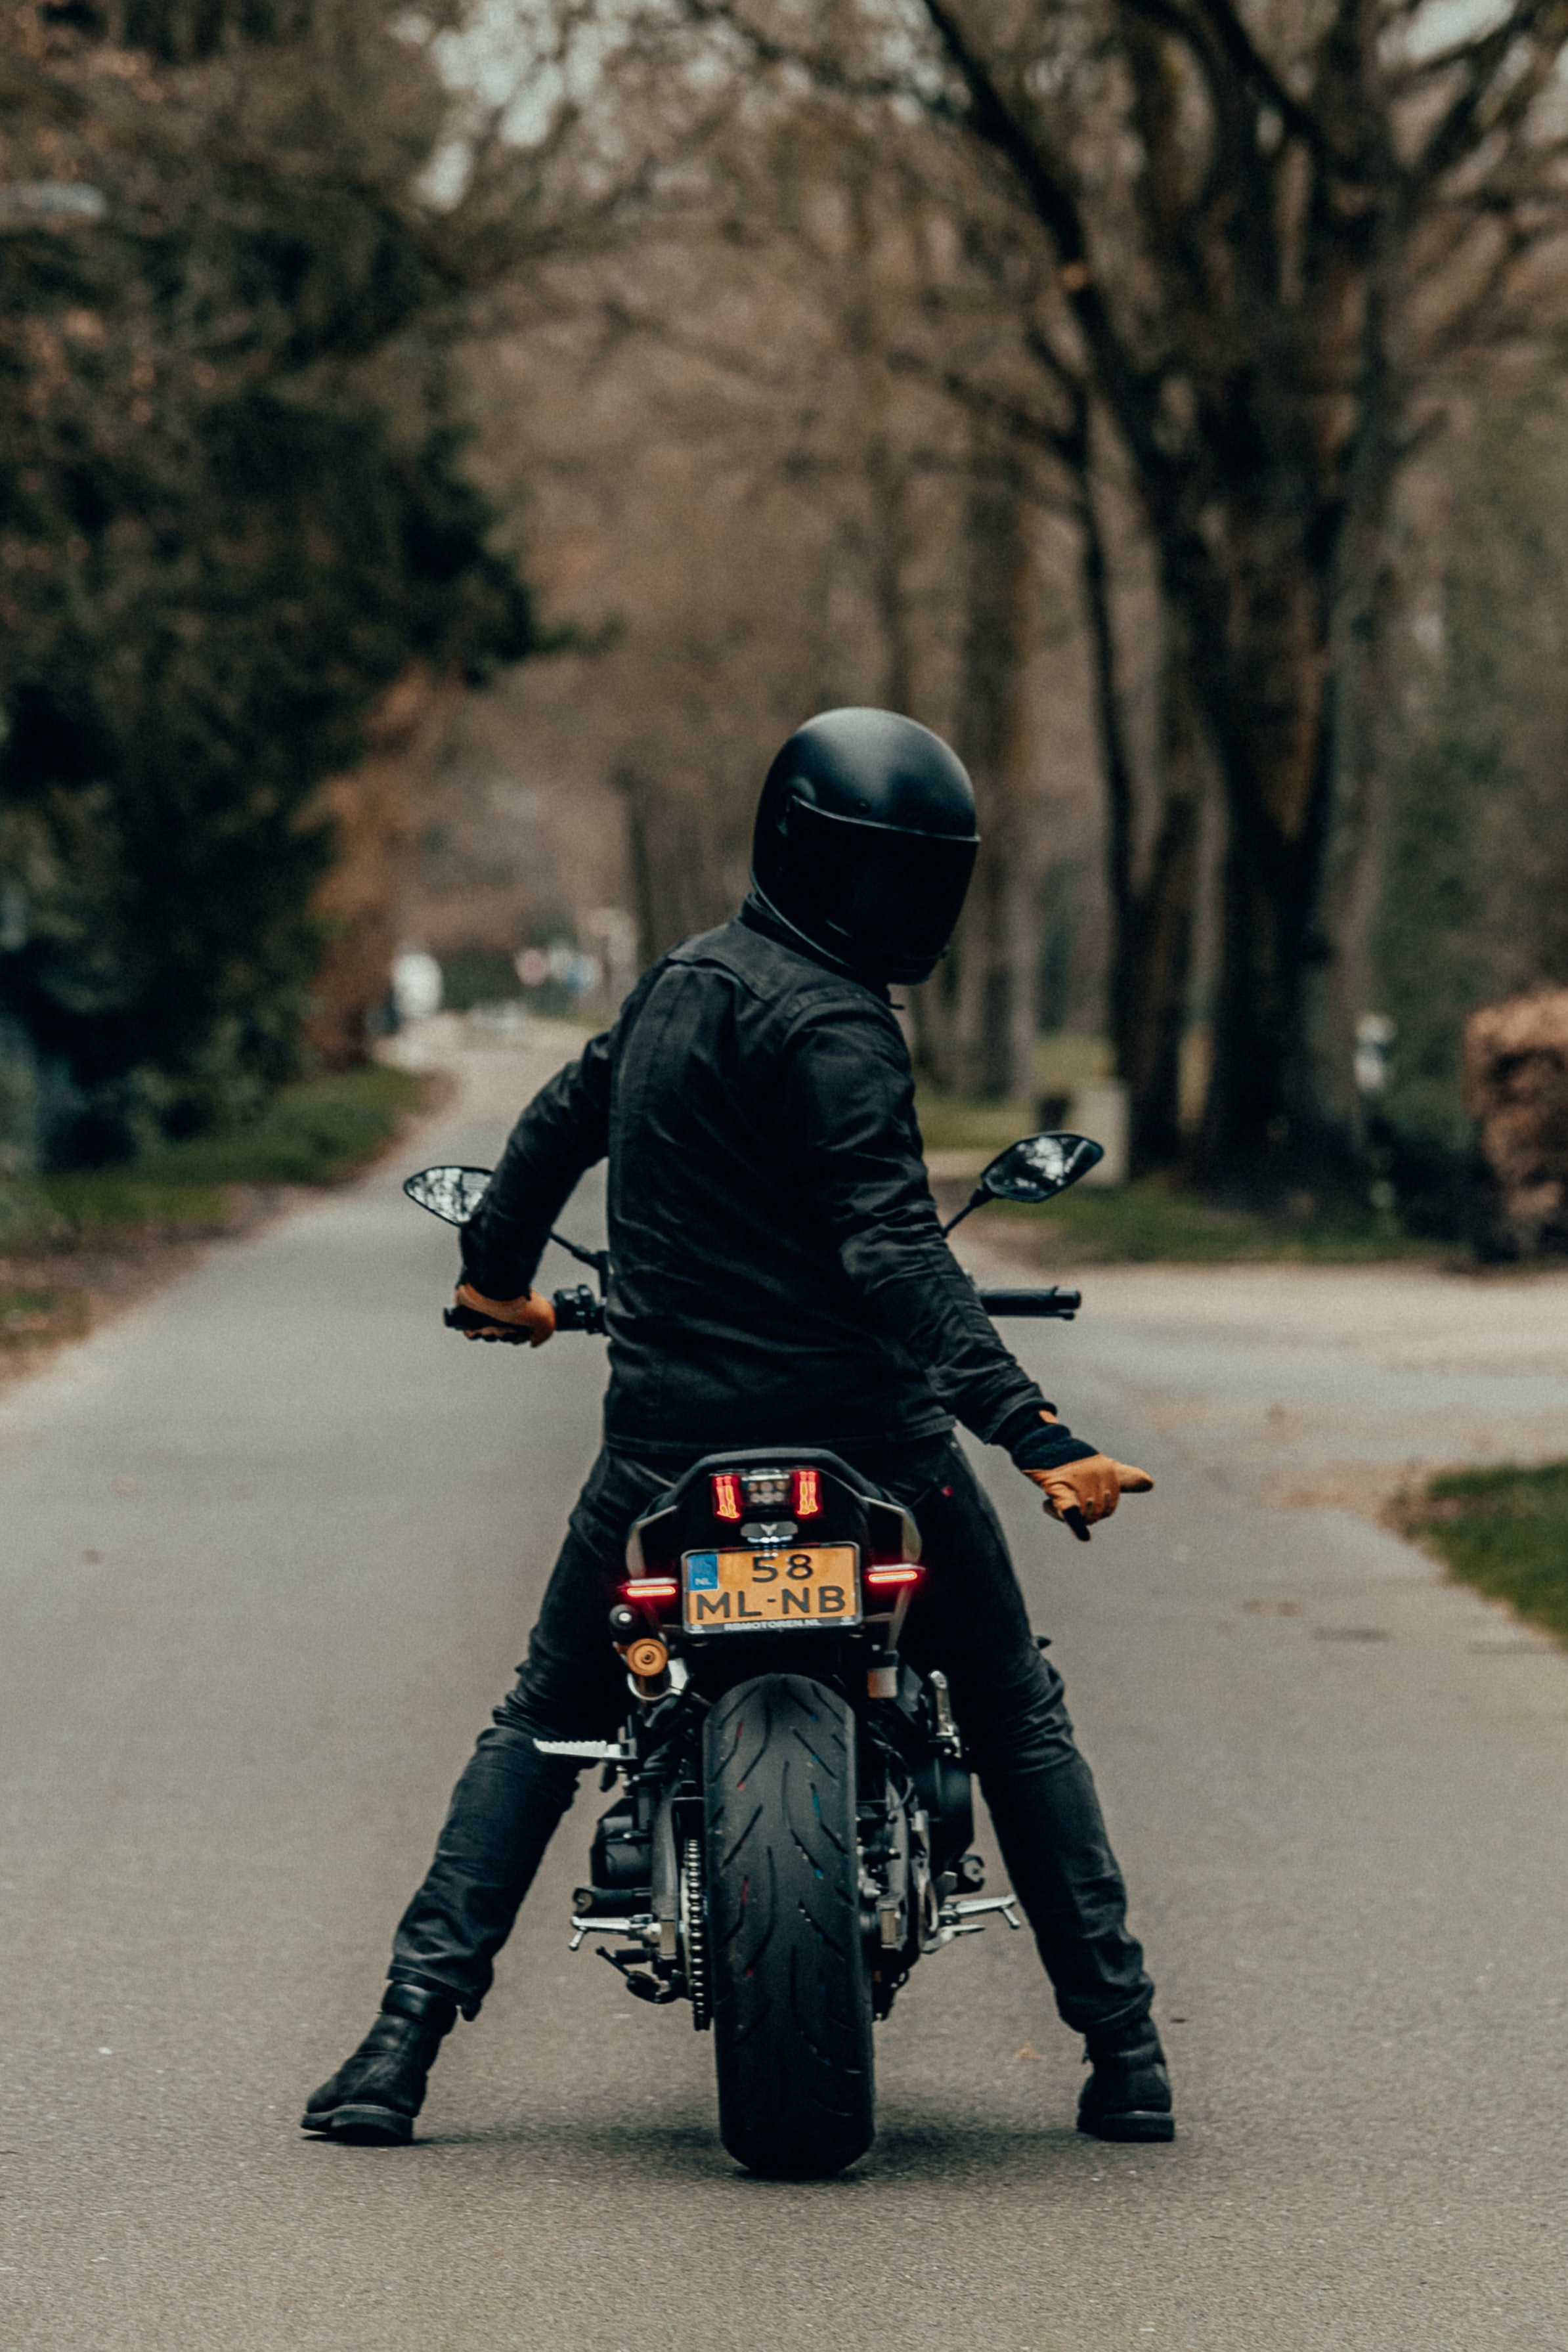 rear view, motorcyclist, back view, helmet, motorcycles, road, motorcycle